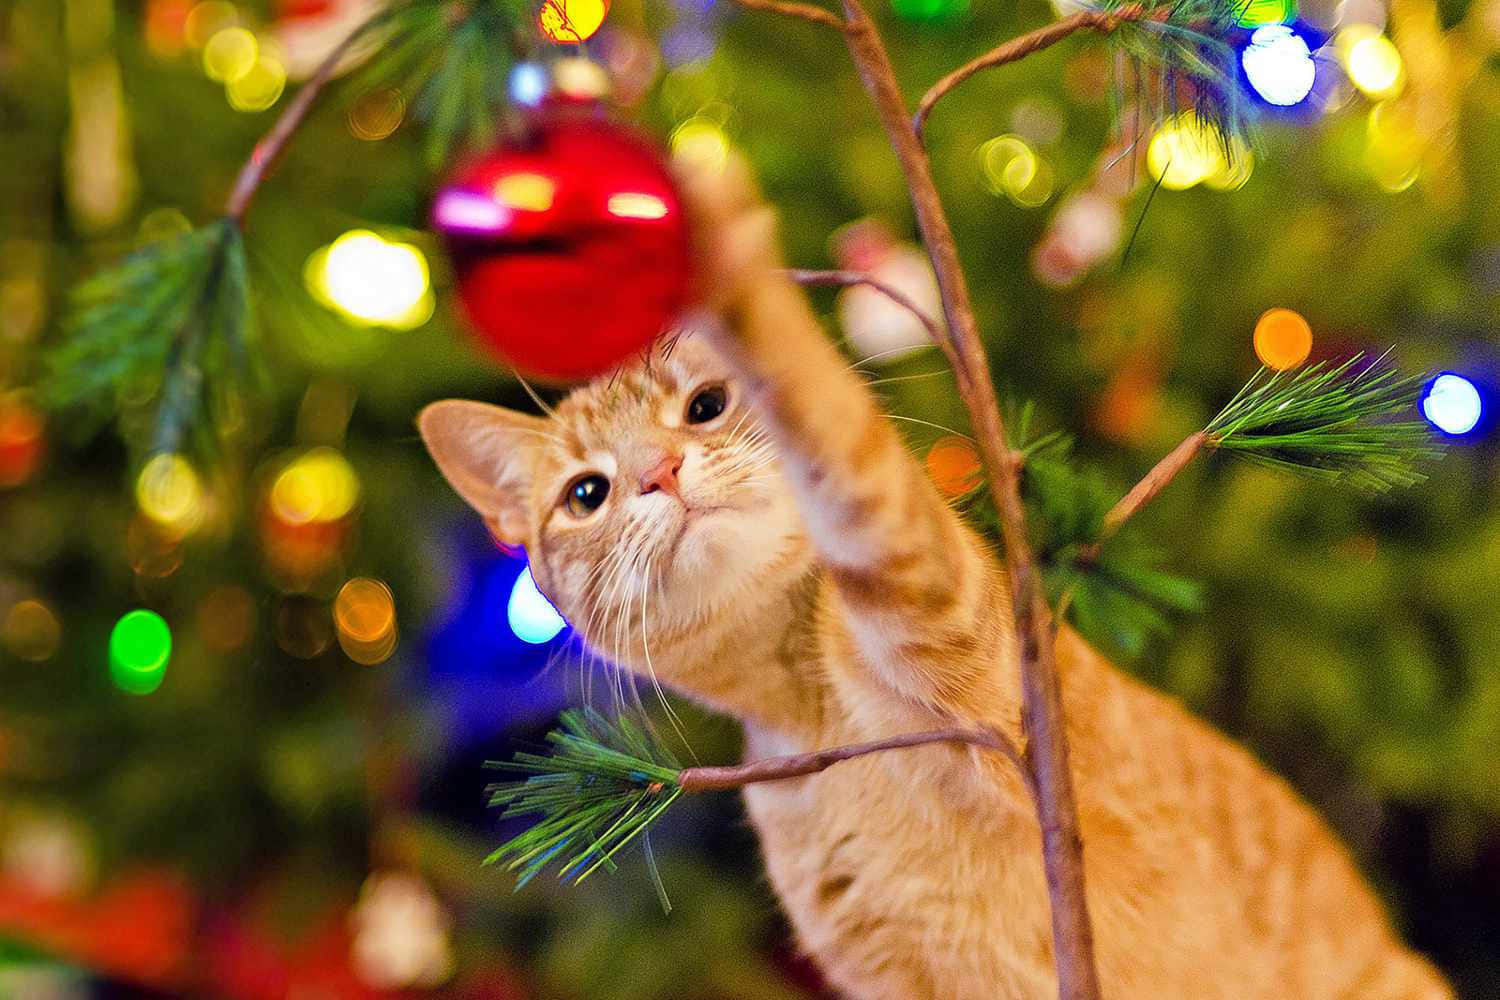 Festive Kitty Christmas Ornament Play Wallpaper